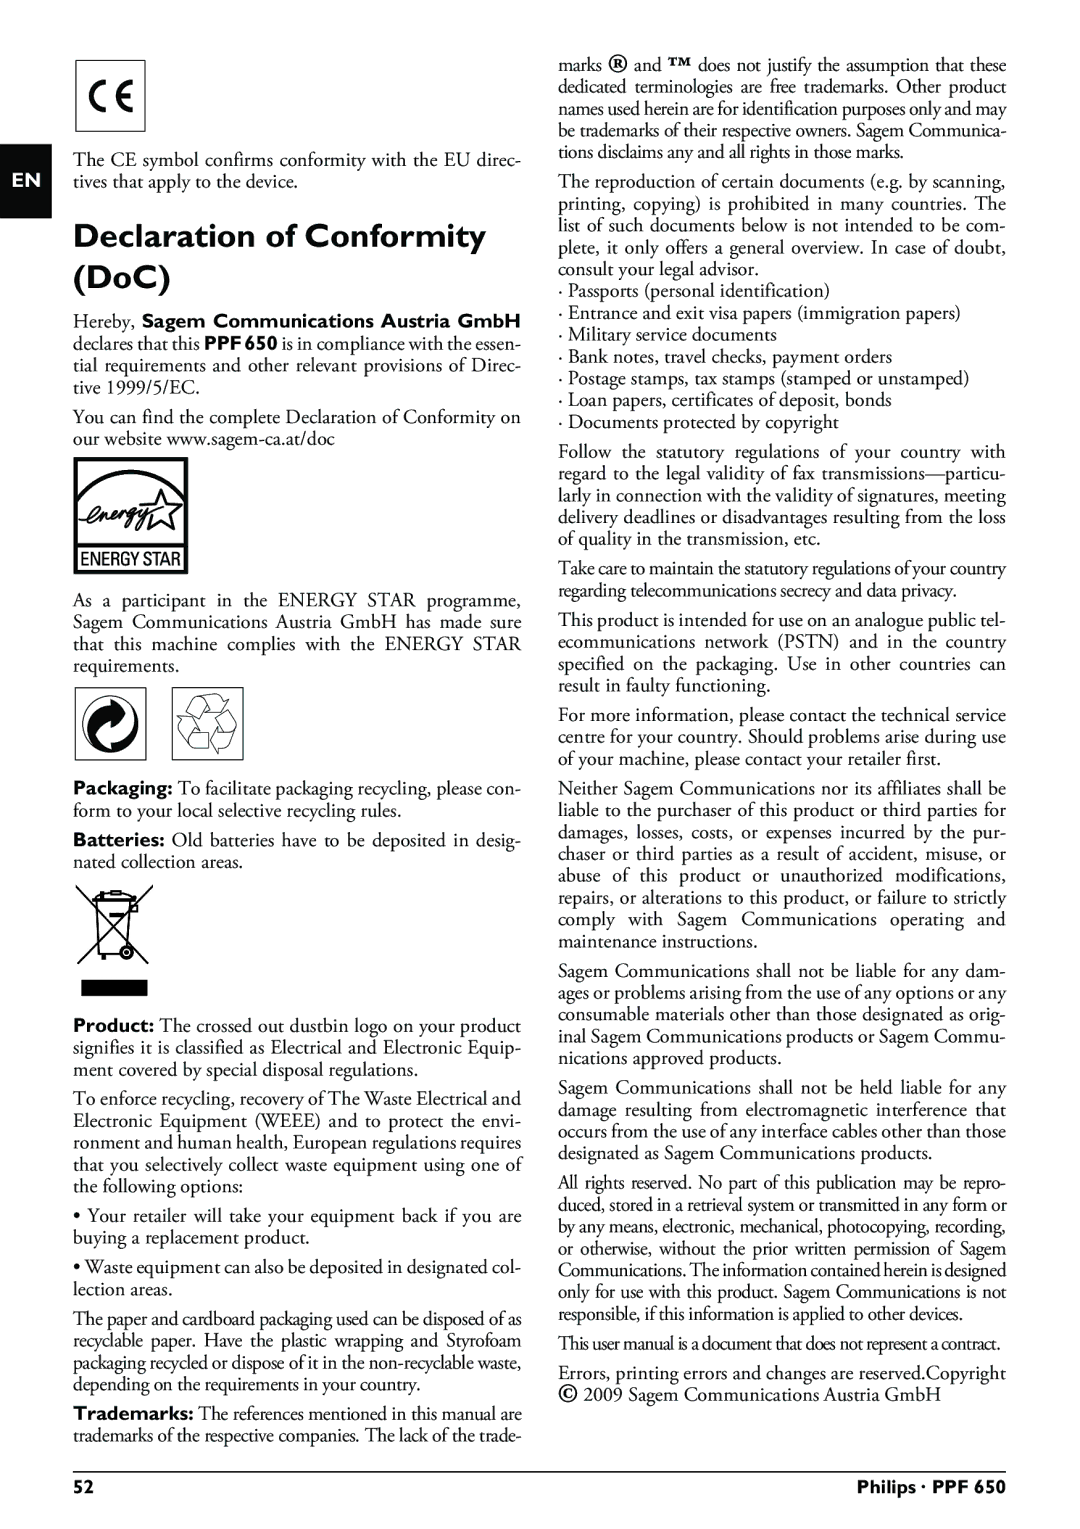 Philips PPF 650 user manual Declaration of Conformity DoC 